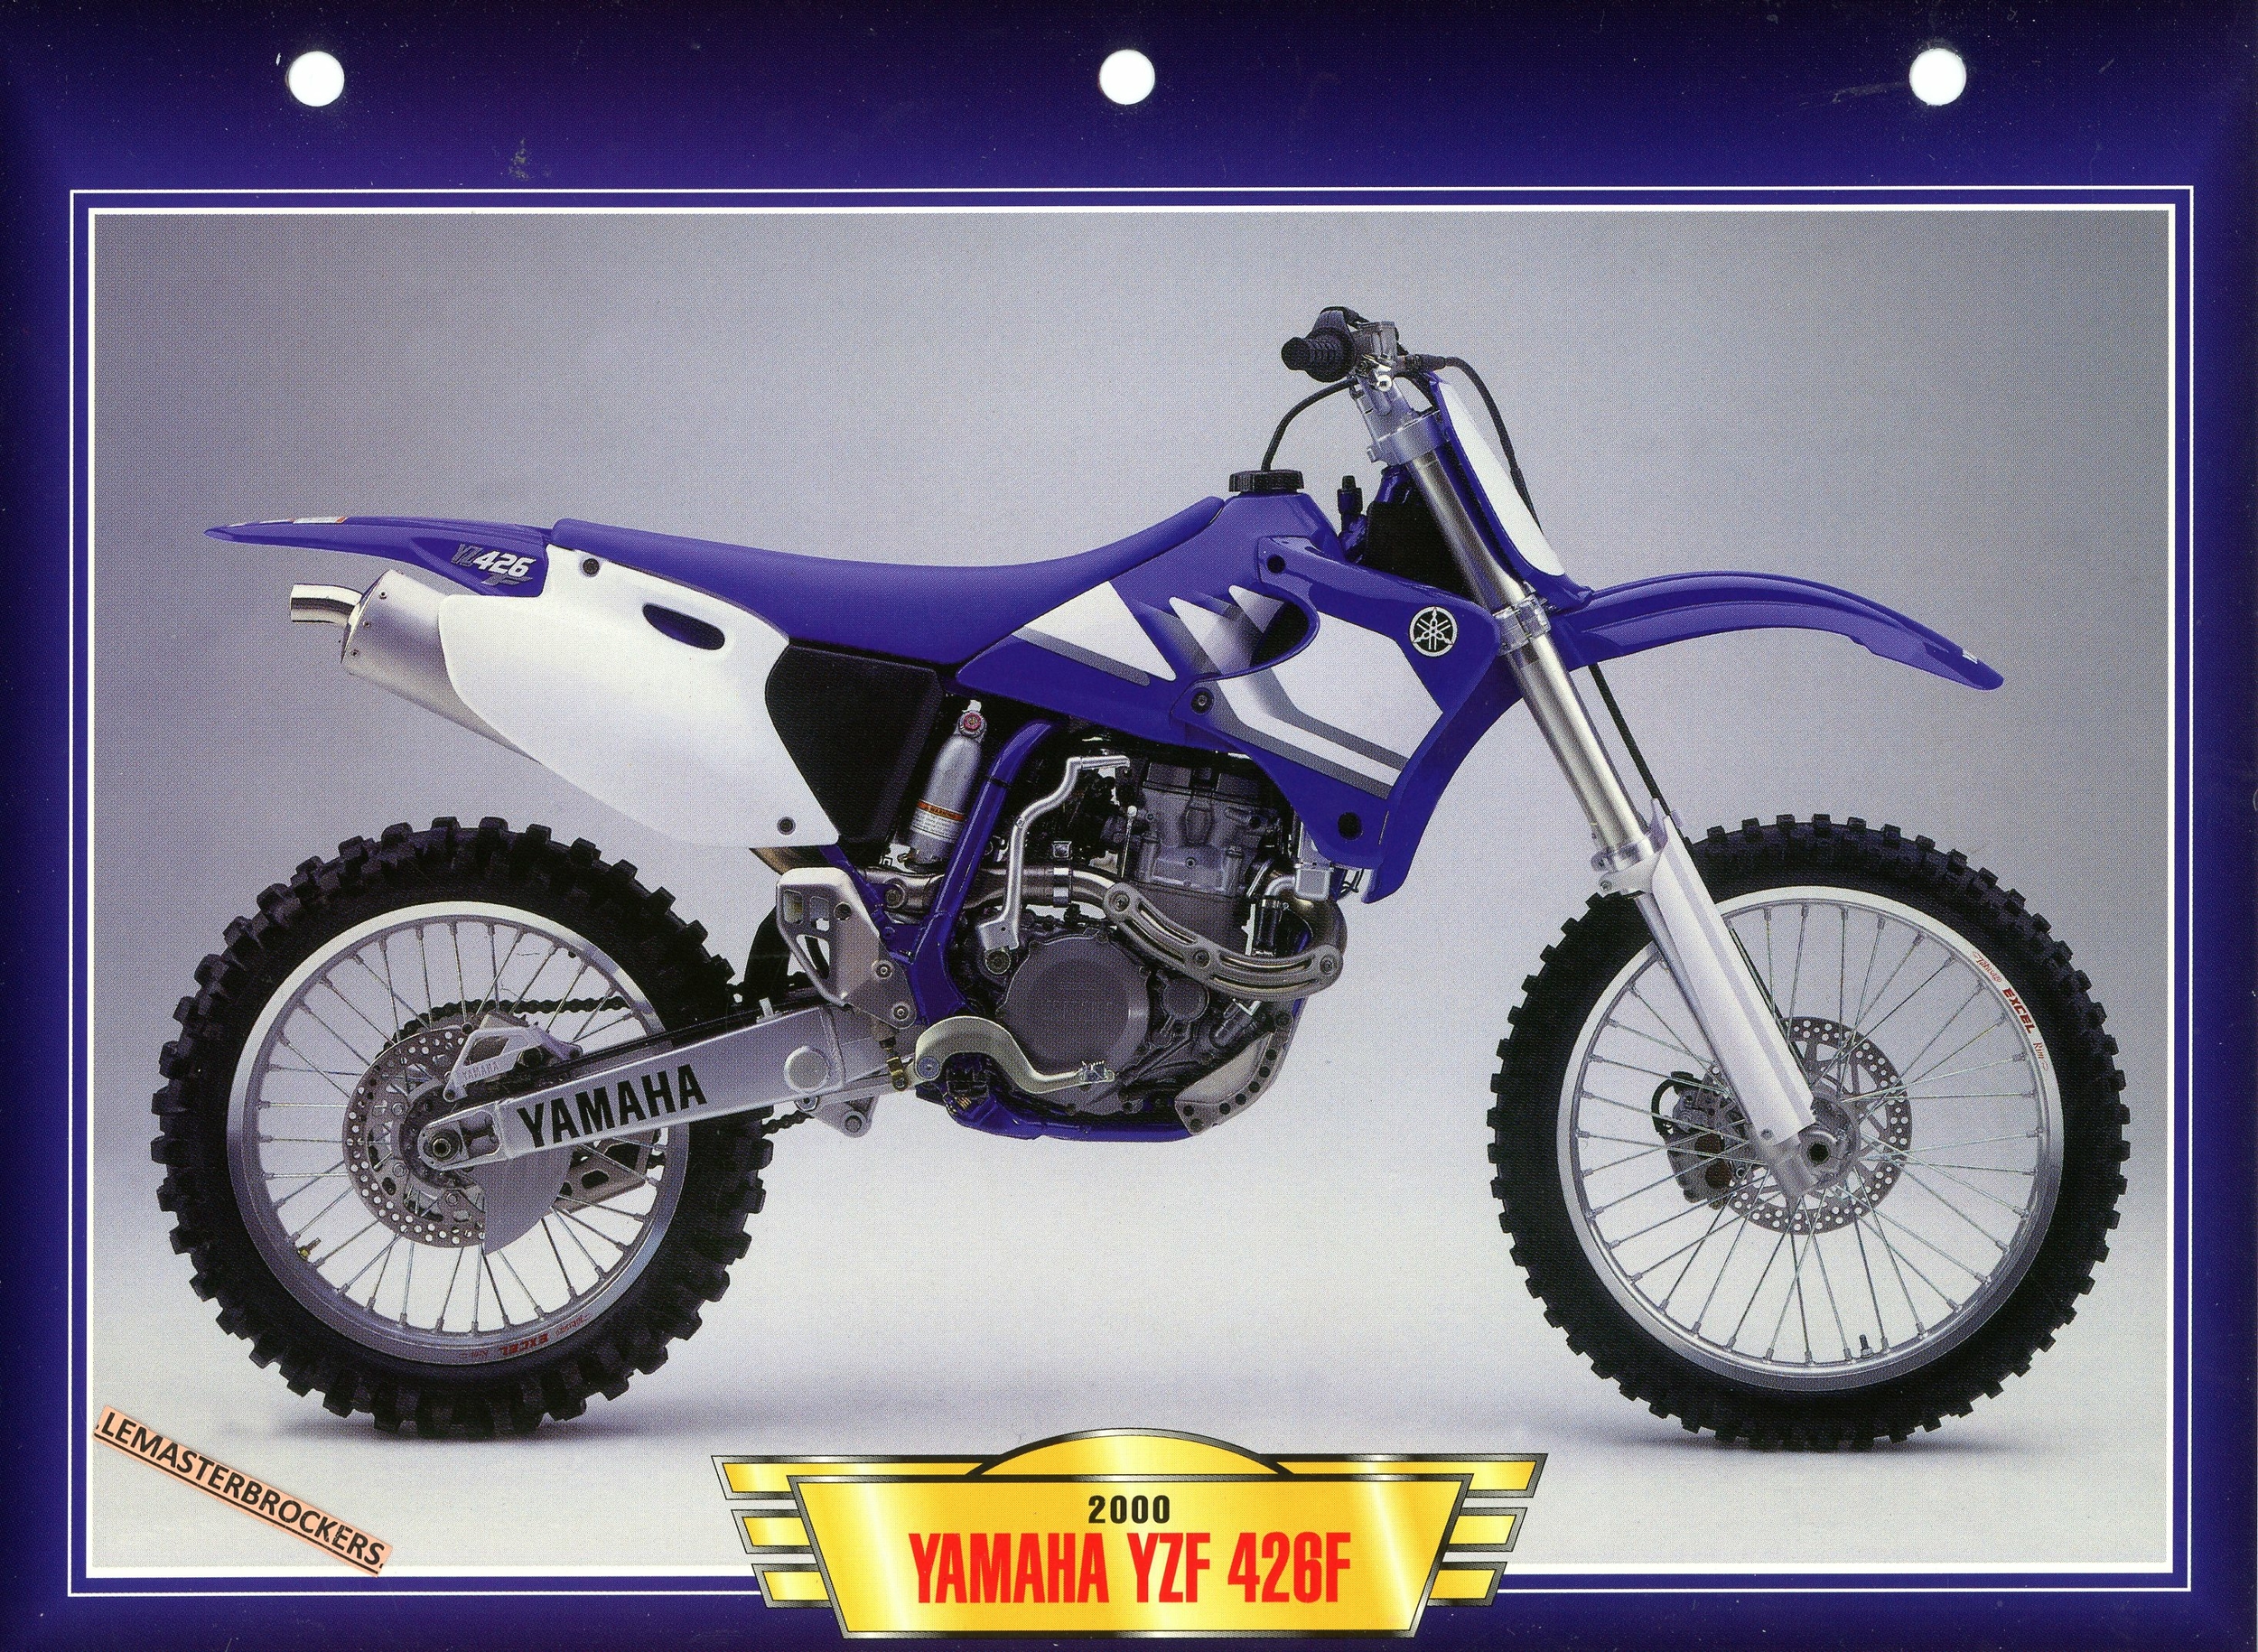 FICHE-MOTO-YAMAHA-YZF426F-2000-lemasterbrockers-card-motorcycles-YZF